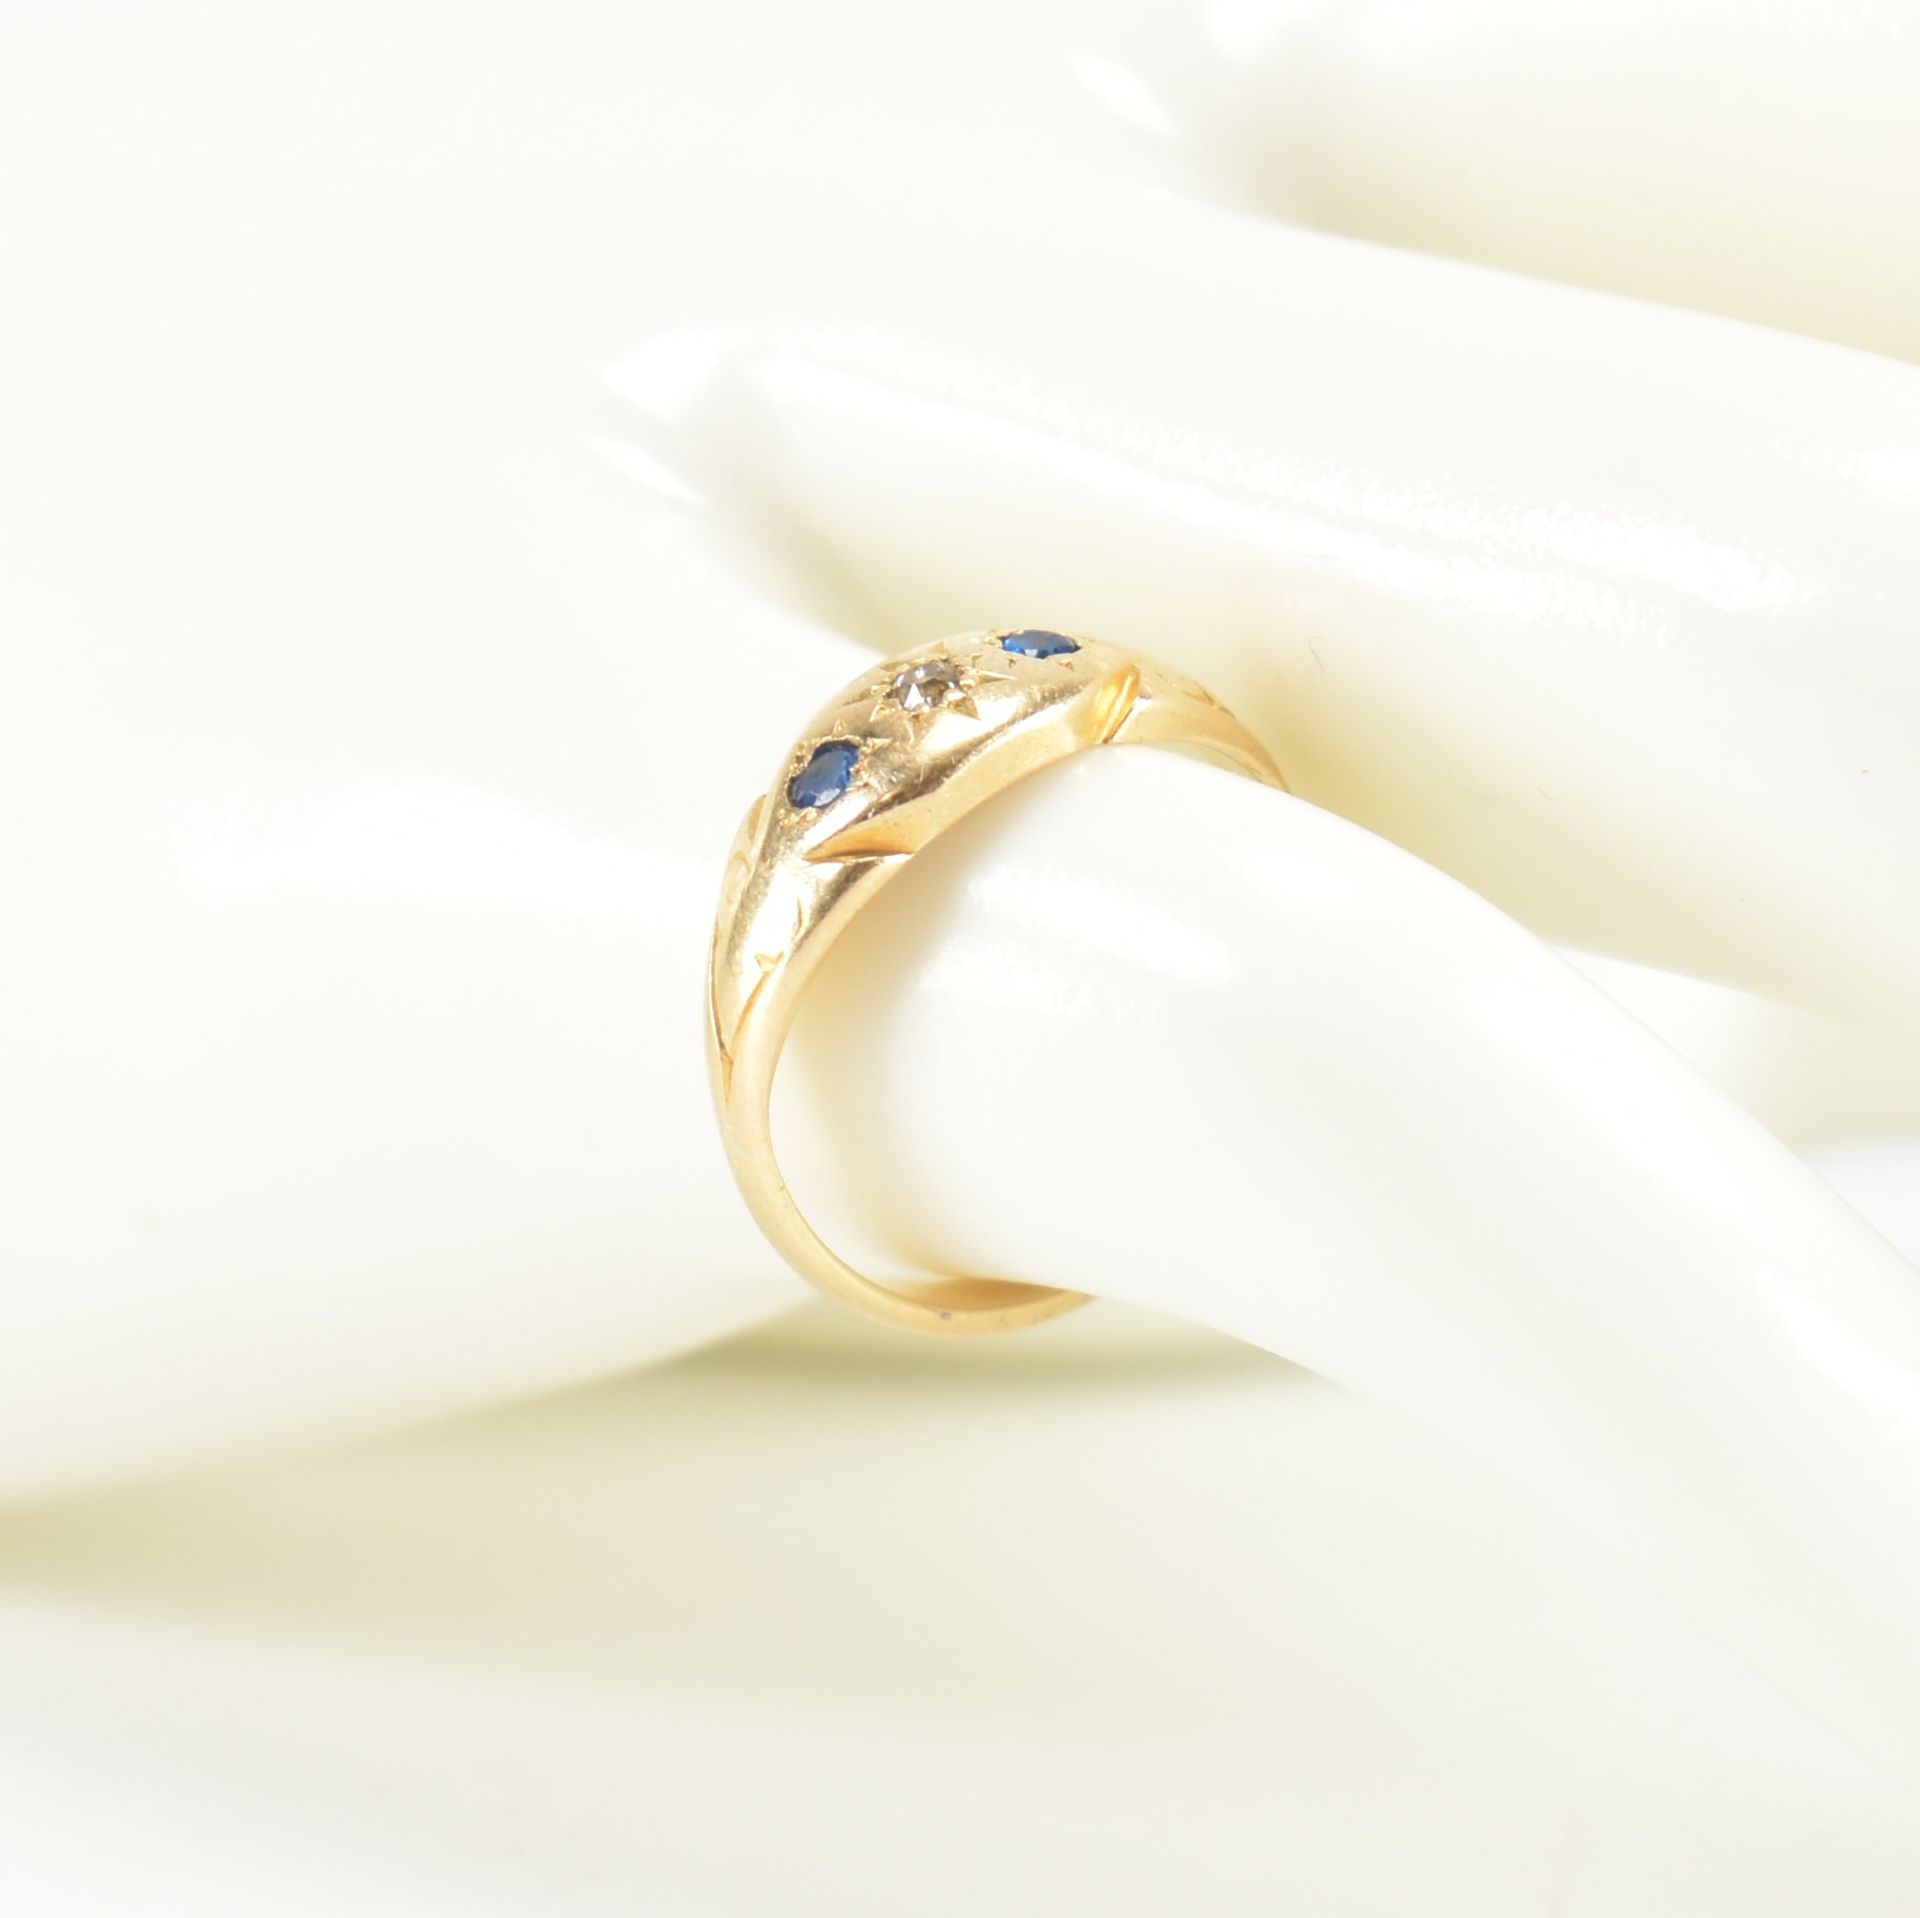 HALLMARKED 18CT GOLD DIAMOND & BLUE STONE RING - Image 9 of 9